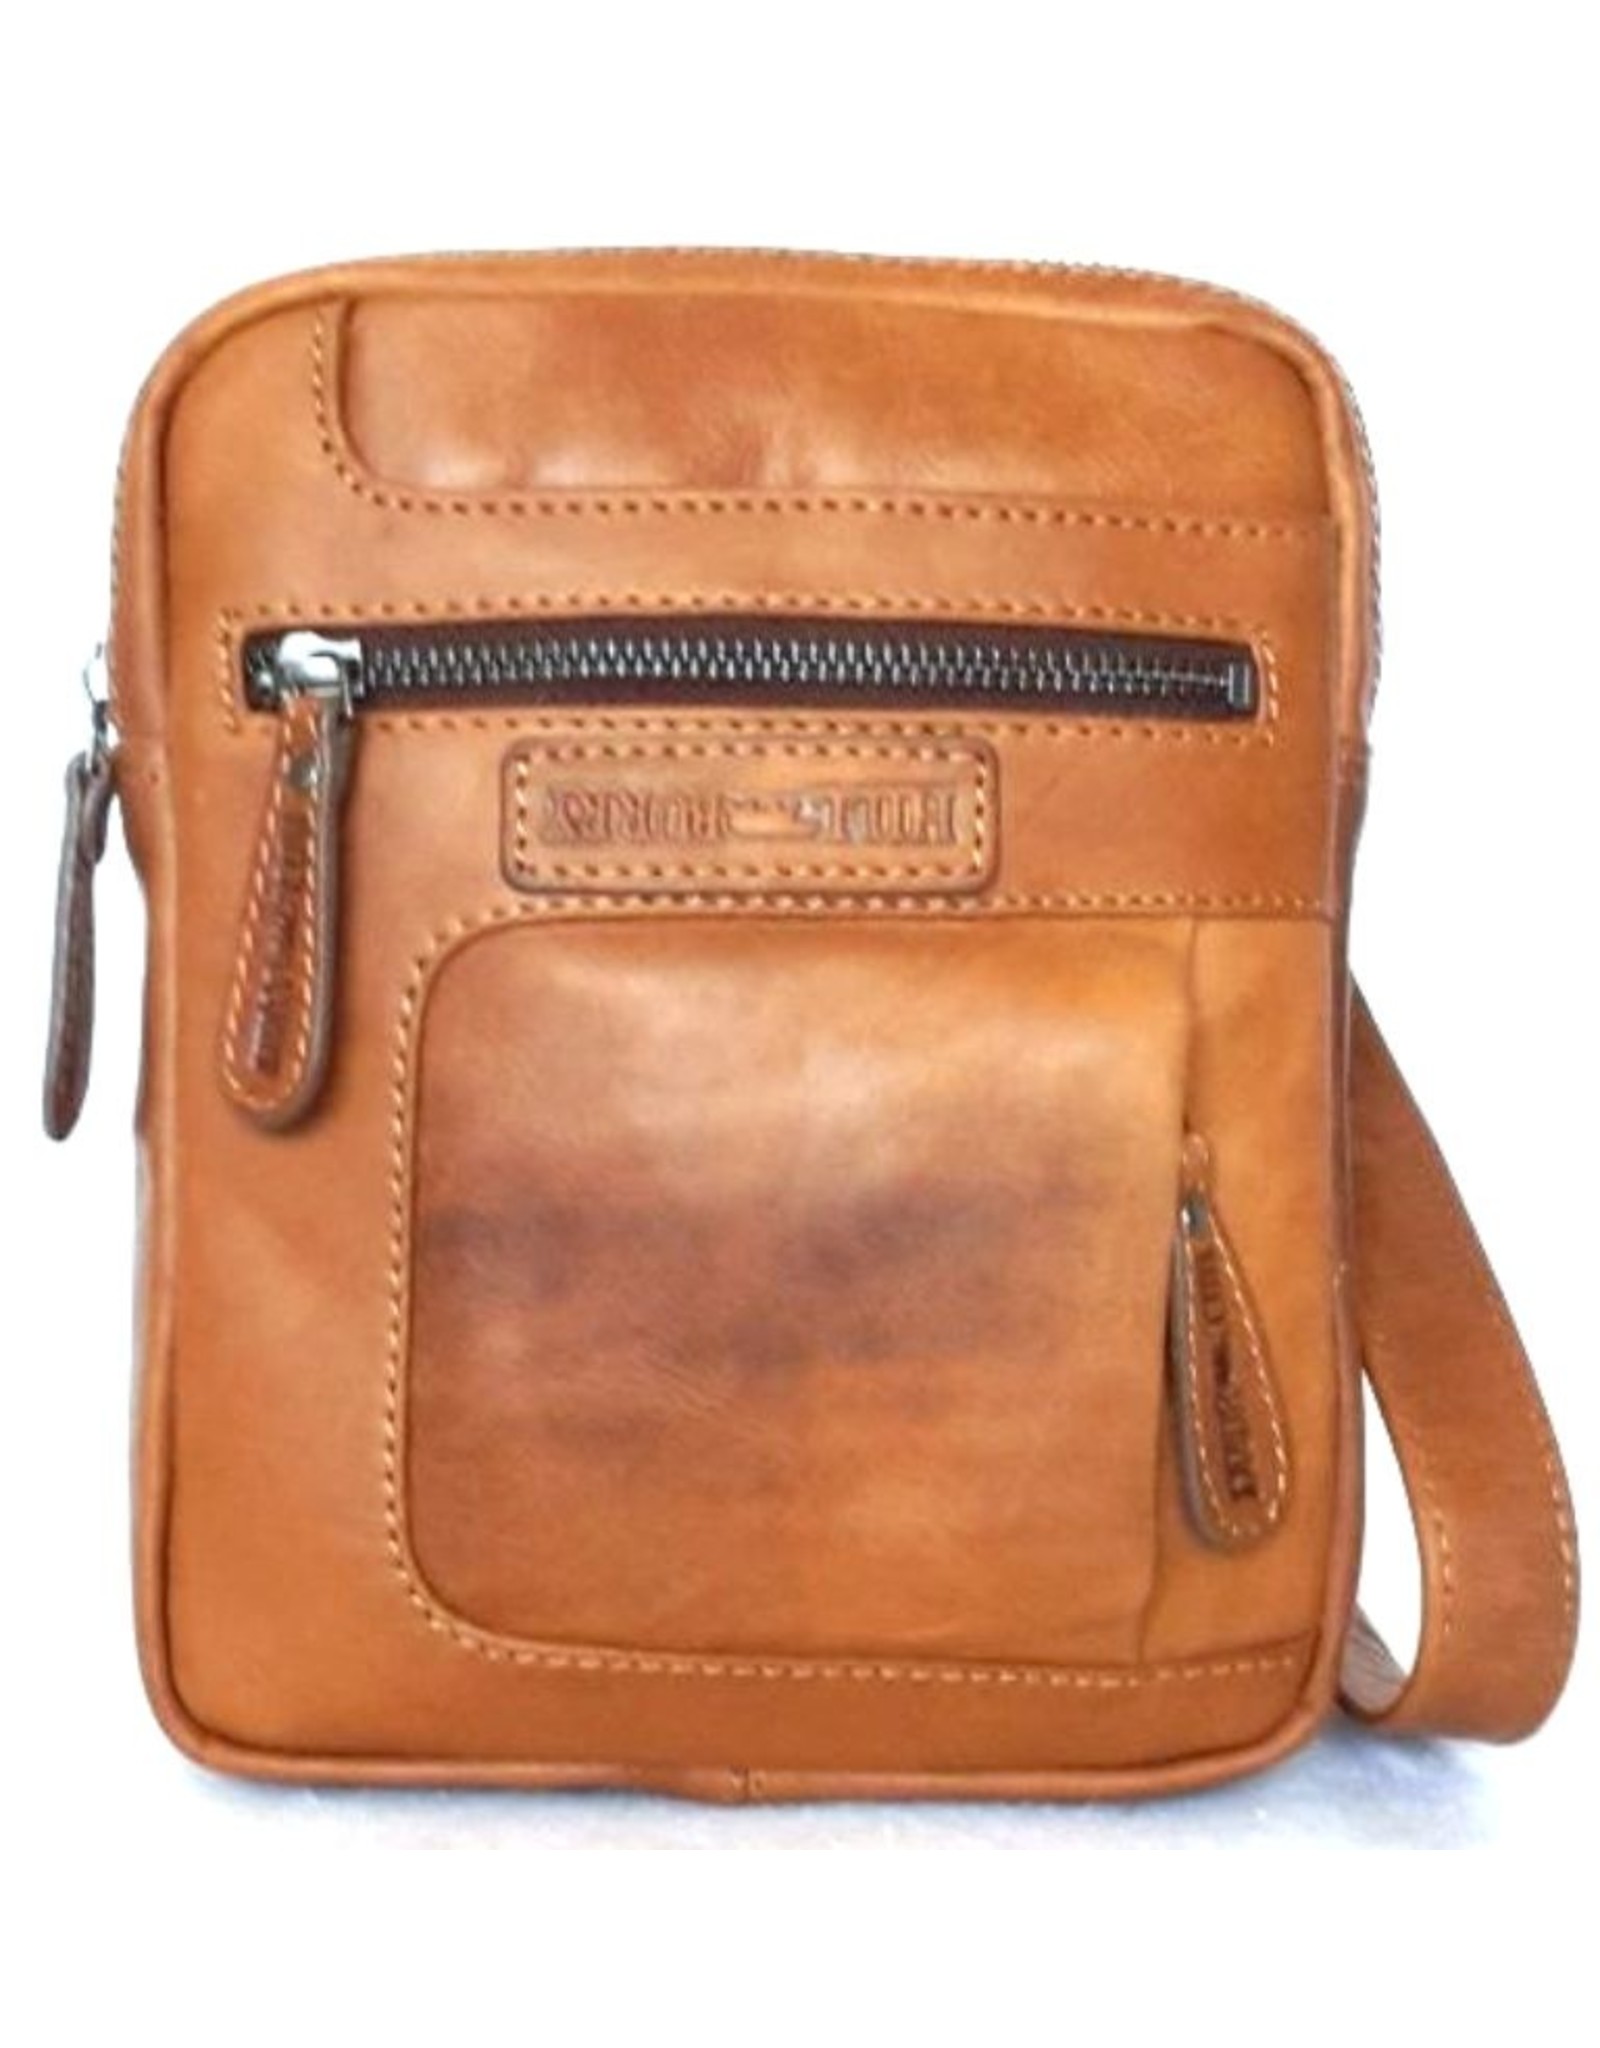 HillBurry Leather bags - Hillburry leather shoulder bag tan 1874